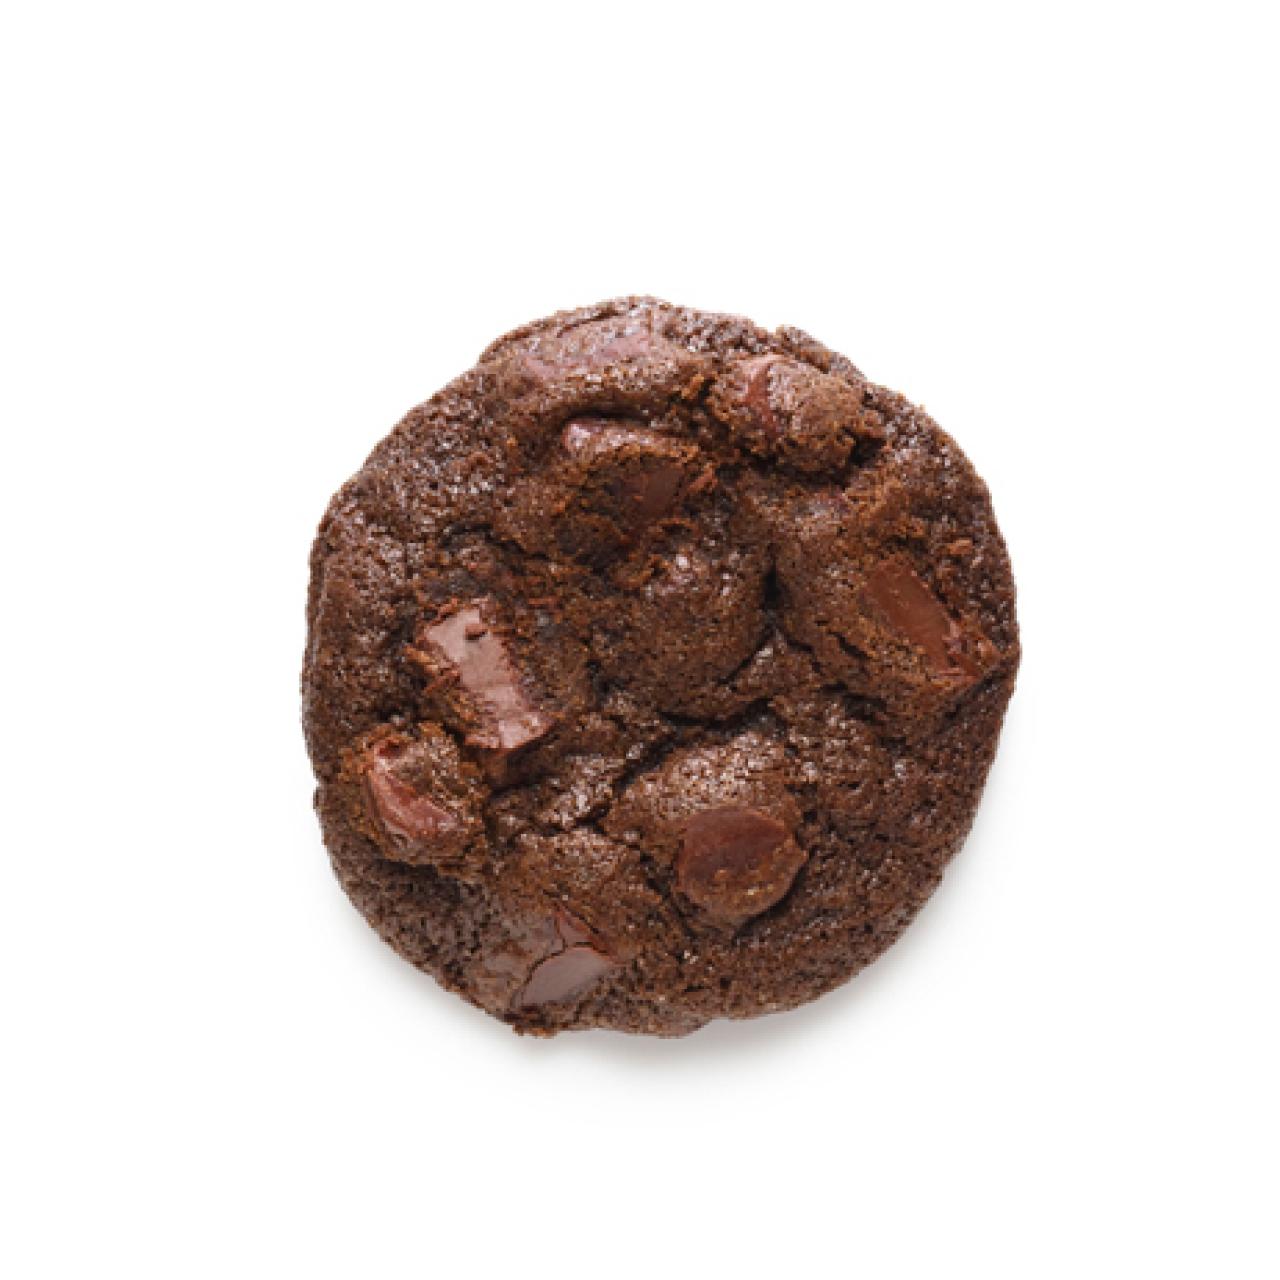 https://food.fnr.sndimg.com/content/dam/images/food/fullset/2012/7/25/0/FNM_0901120-Mix-and-Match-Chocolate-Cookies-Recipe-02_s4x3.jpg.rend.hgtvcom.1280.1280.suffix/1371607142908.jpeg